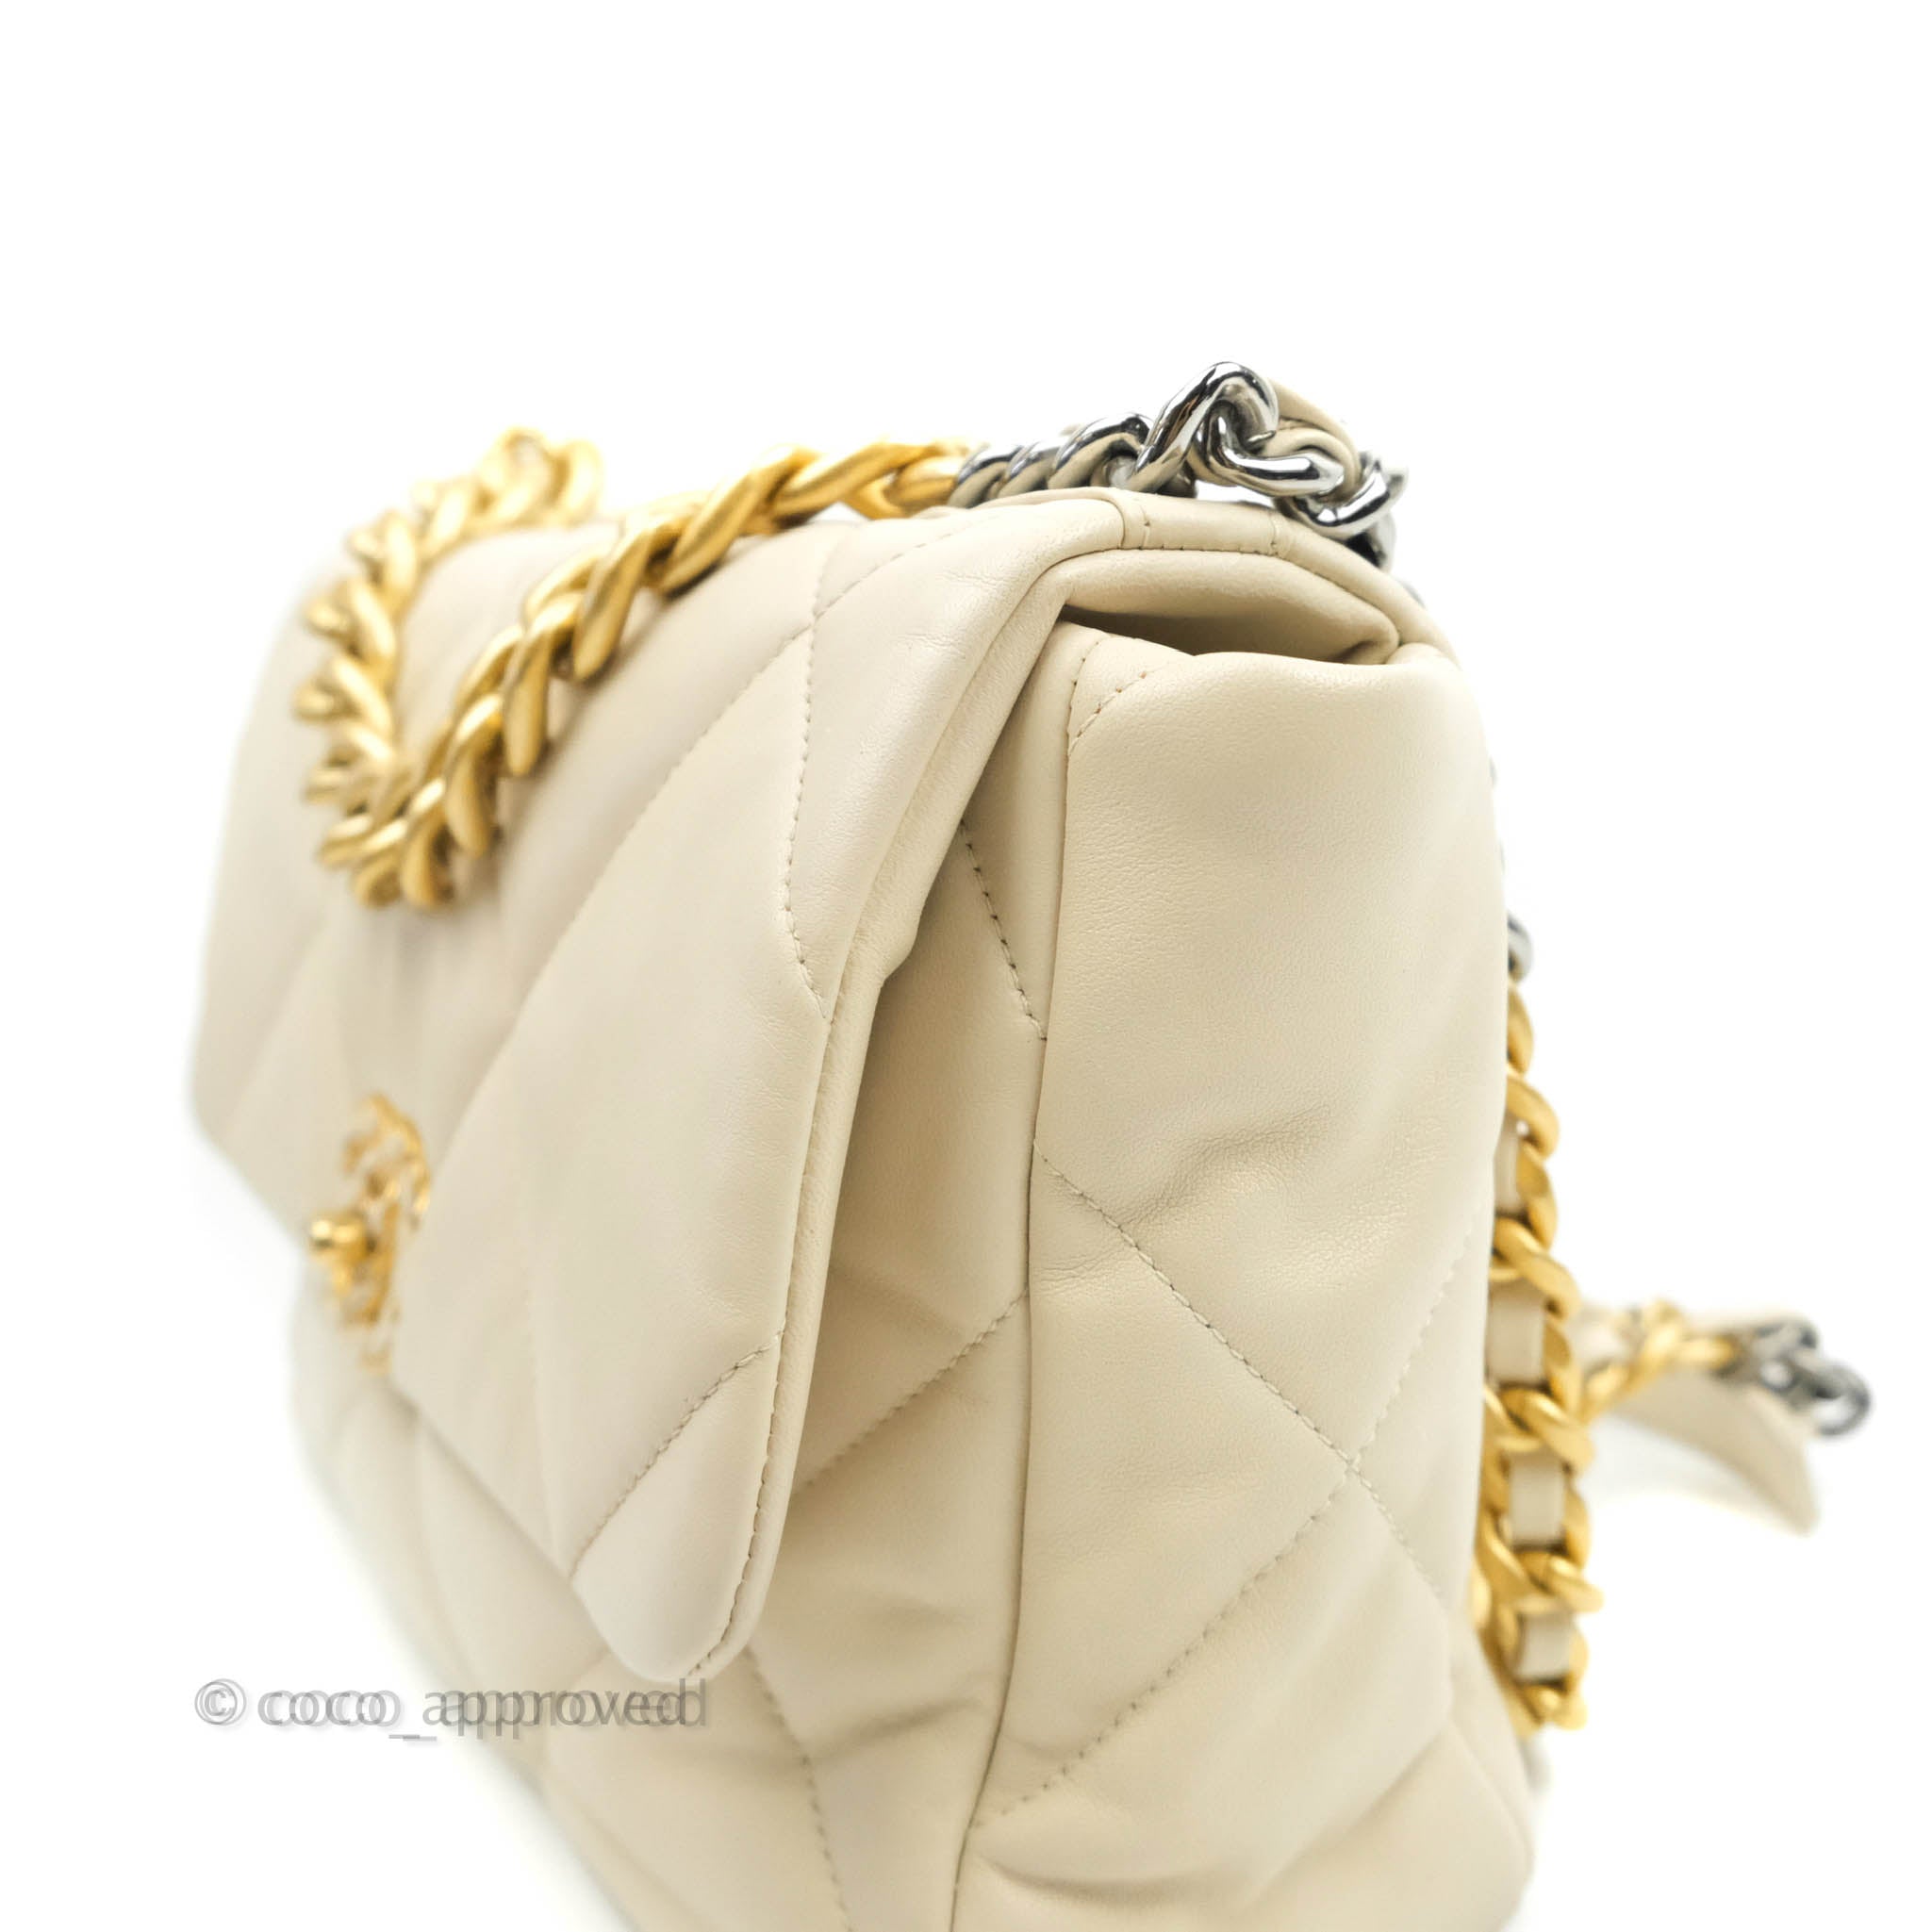 NIB Chanel 19 Small Flap Bag - Beige Goatskin